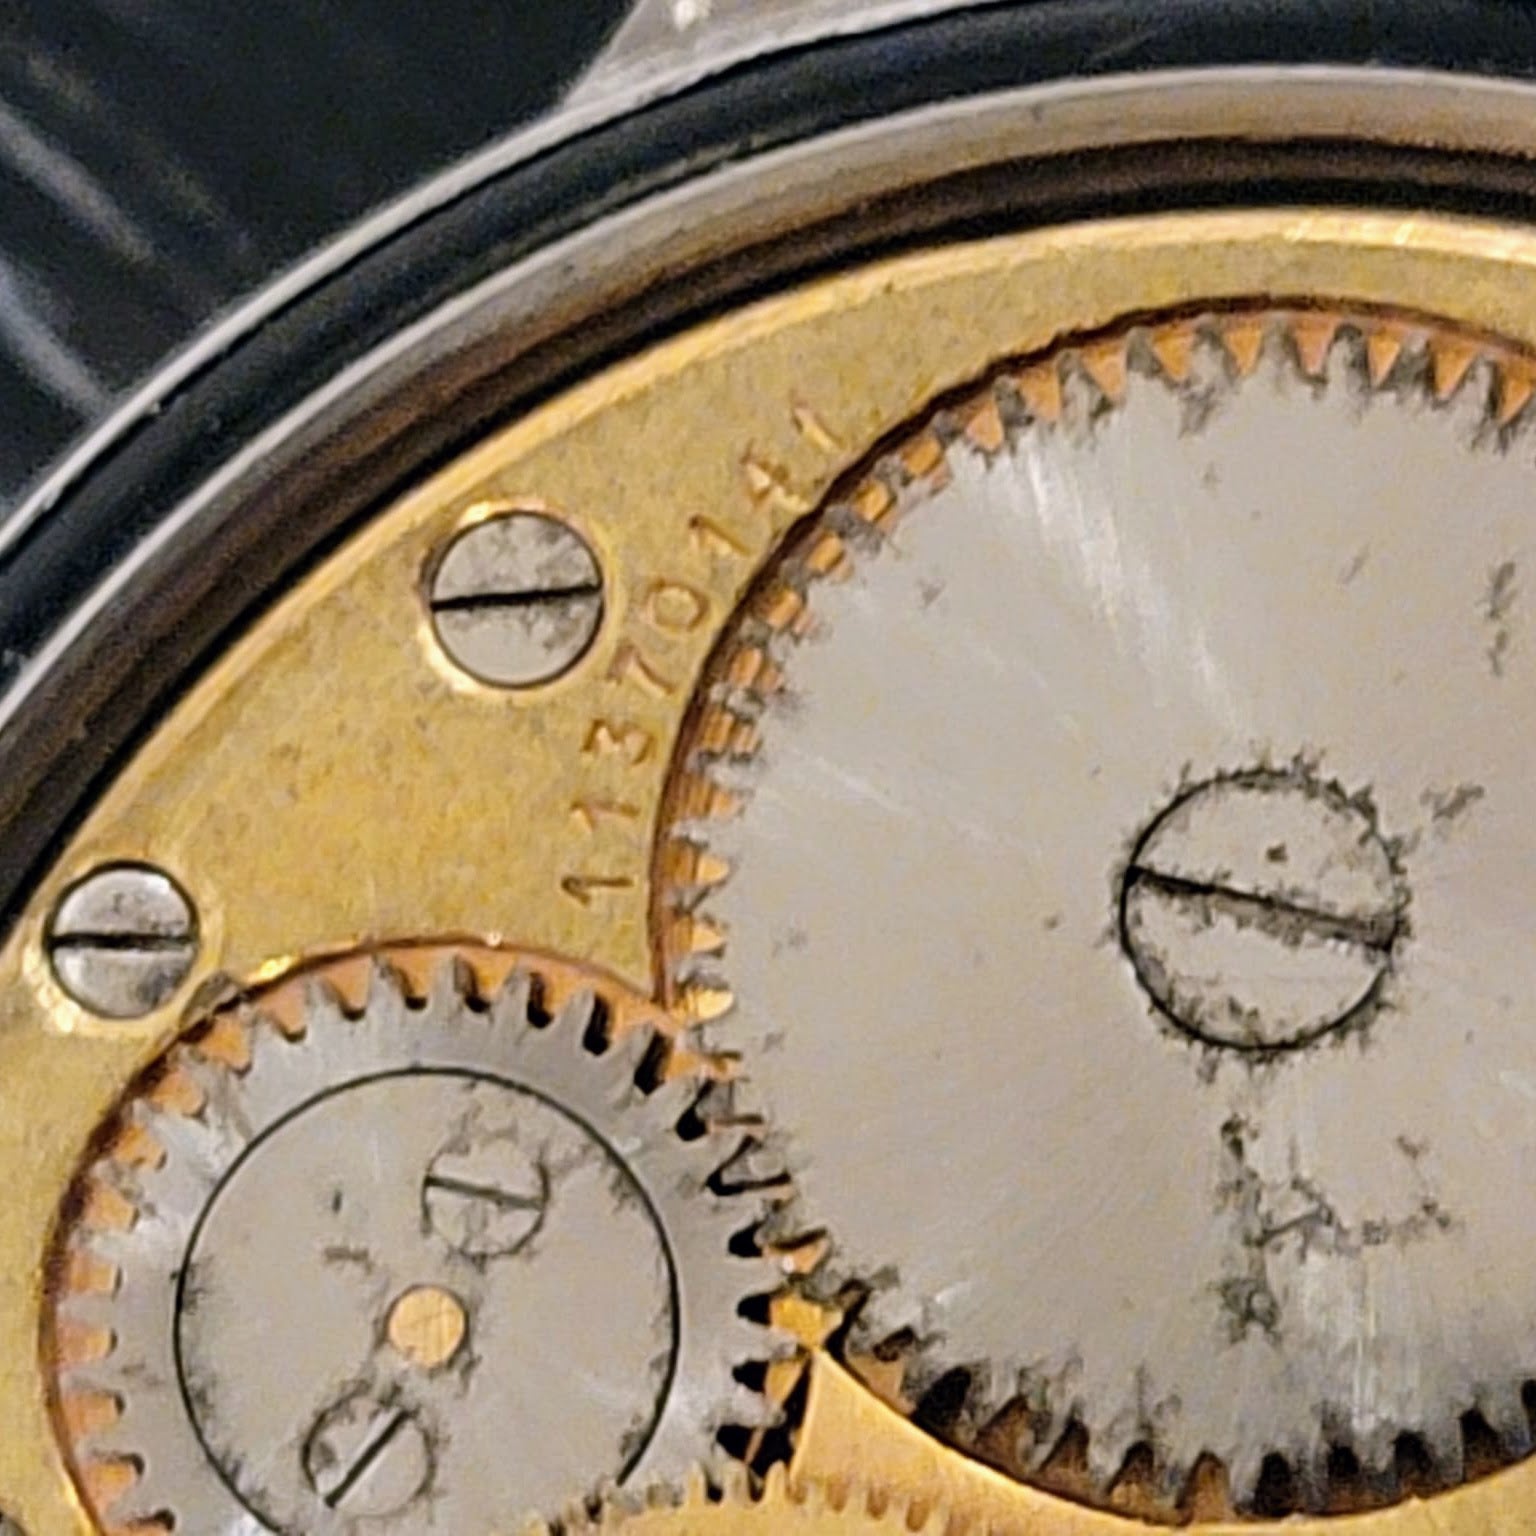 1948 OMEGA Seamaster Wristwatch Cal. 285 Vintage Watch Ref. 14390-61-SC